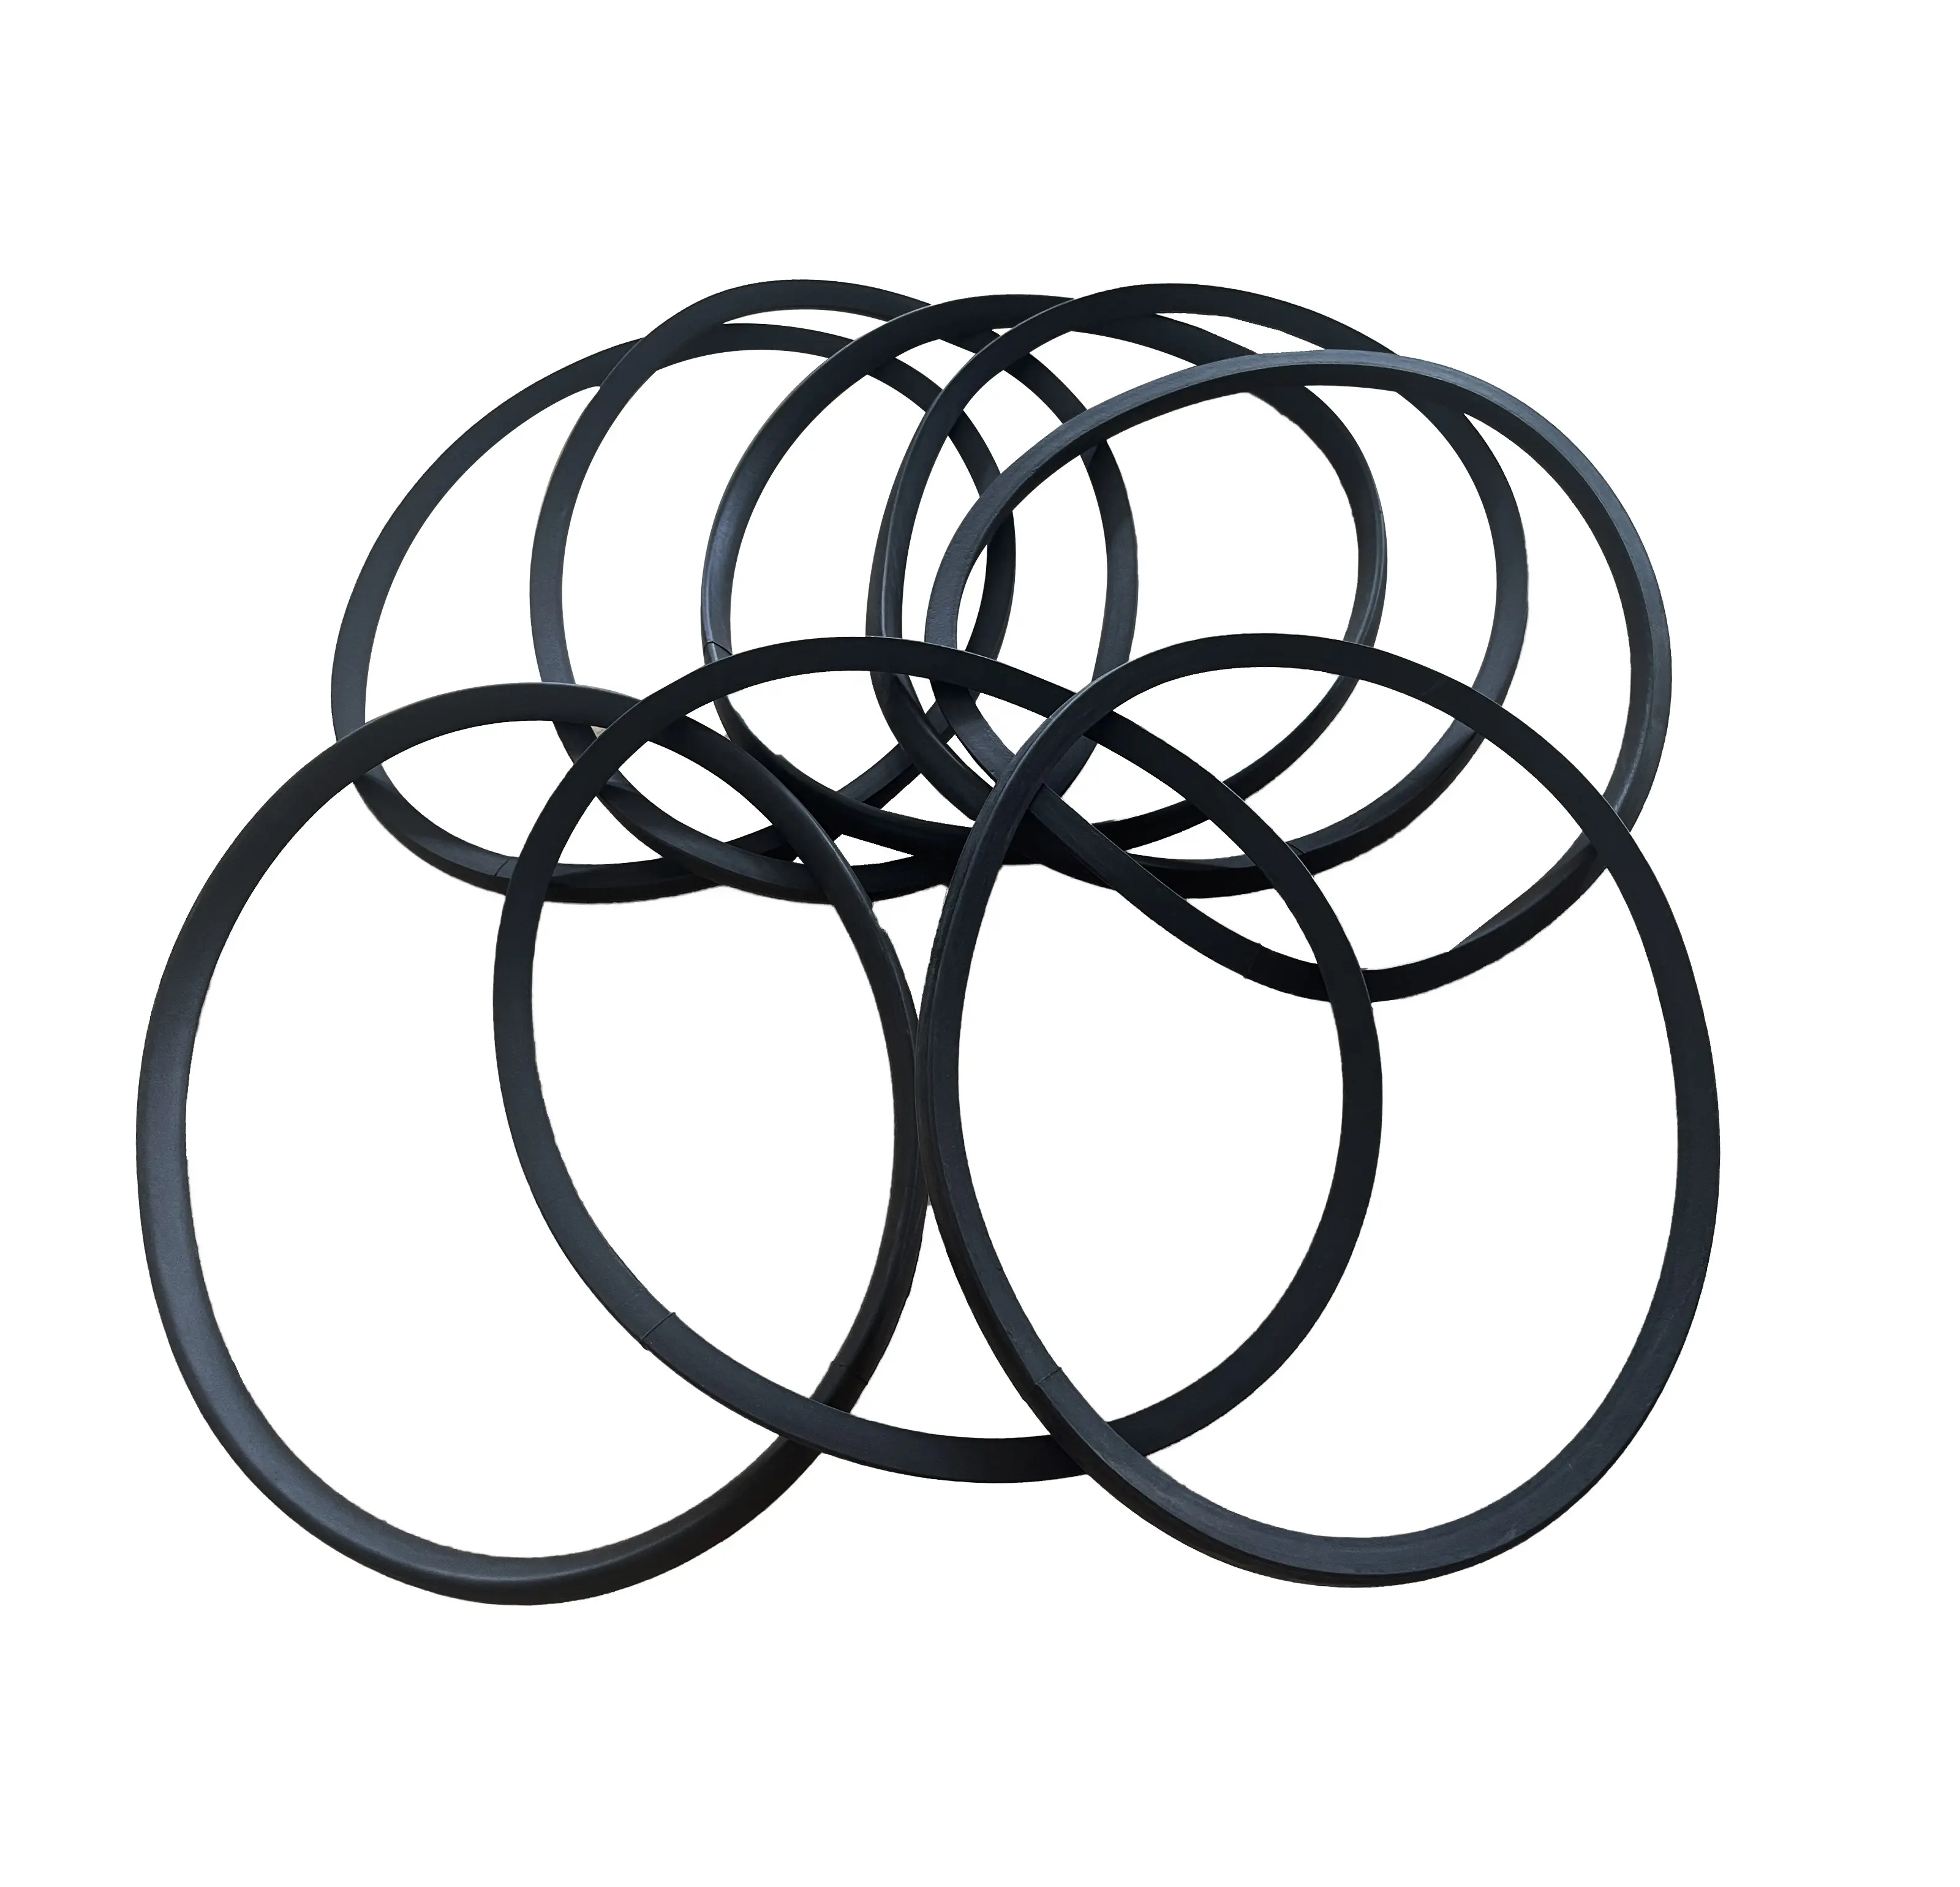 Produsen grosir cincin segel silikon karet hitam untuk Filter industri